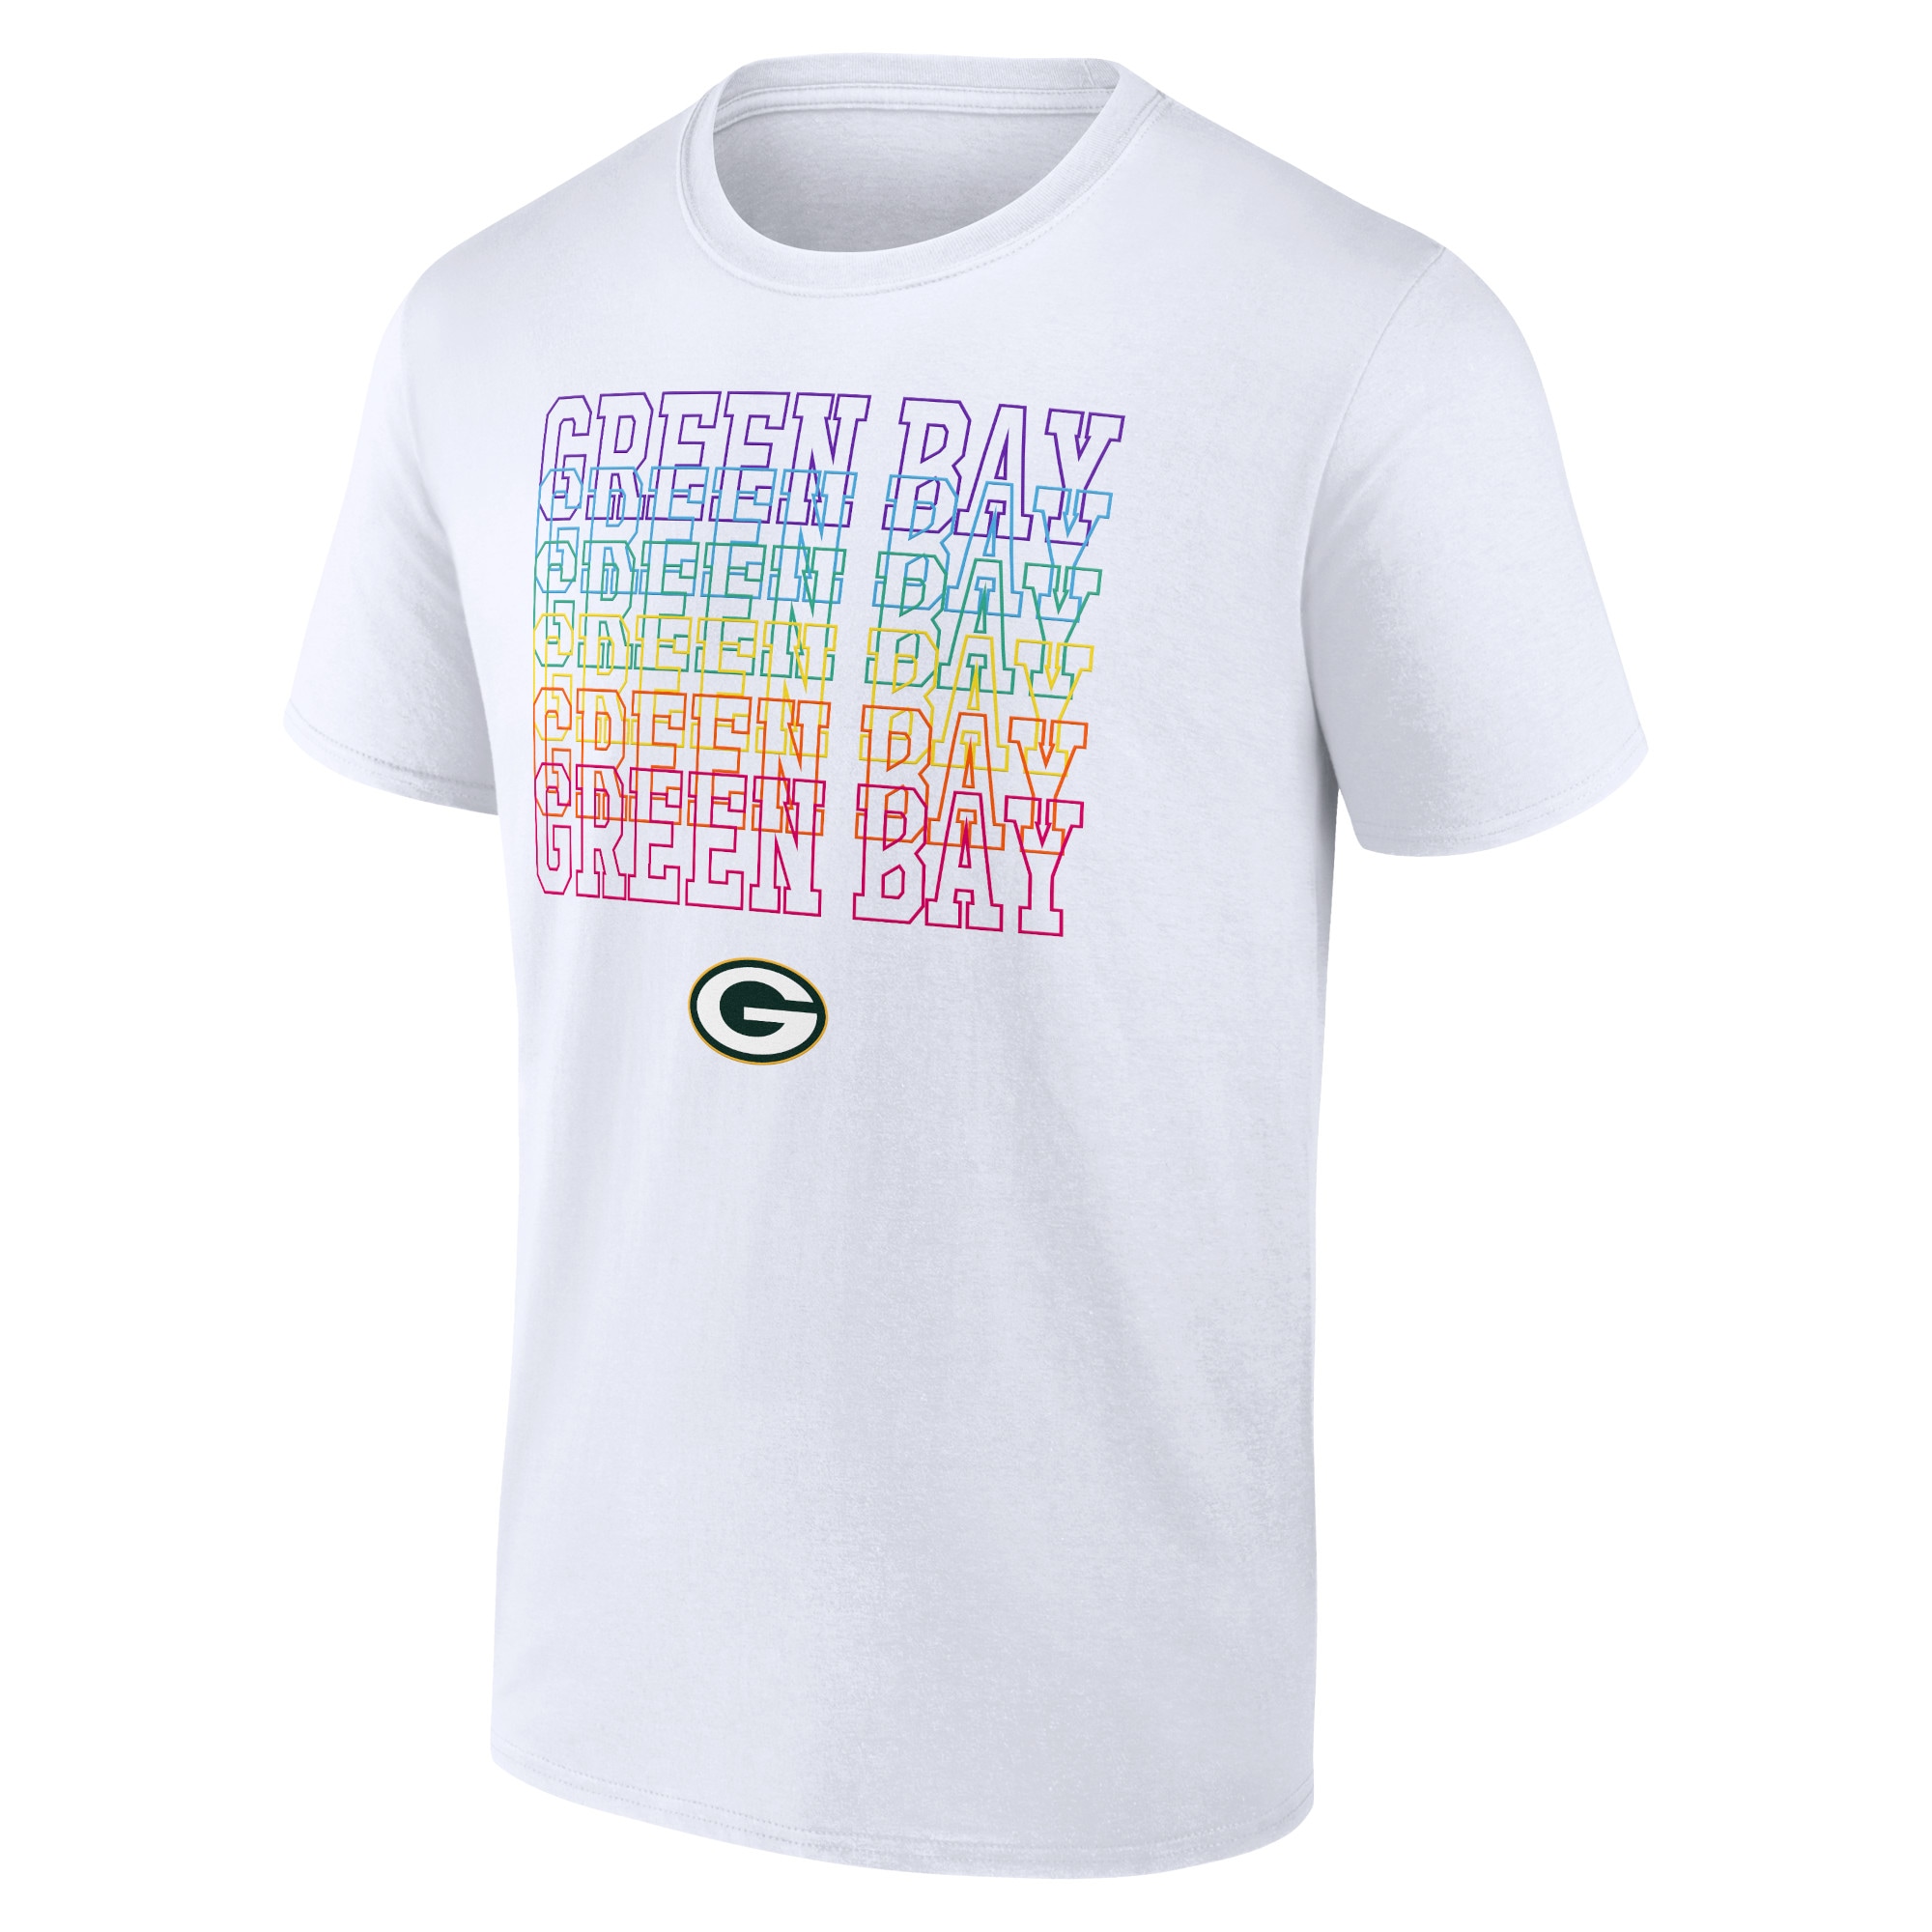 Men's Fanatics Branded White Green Bay Packers City Pride Logo T-Shirt - image 2 of 3